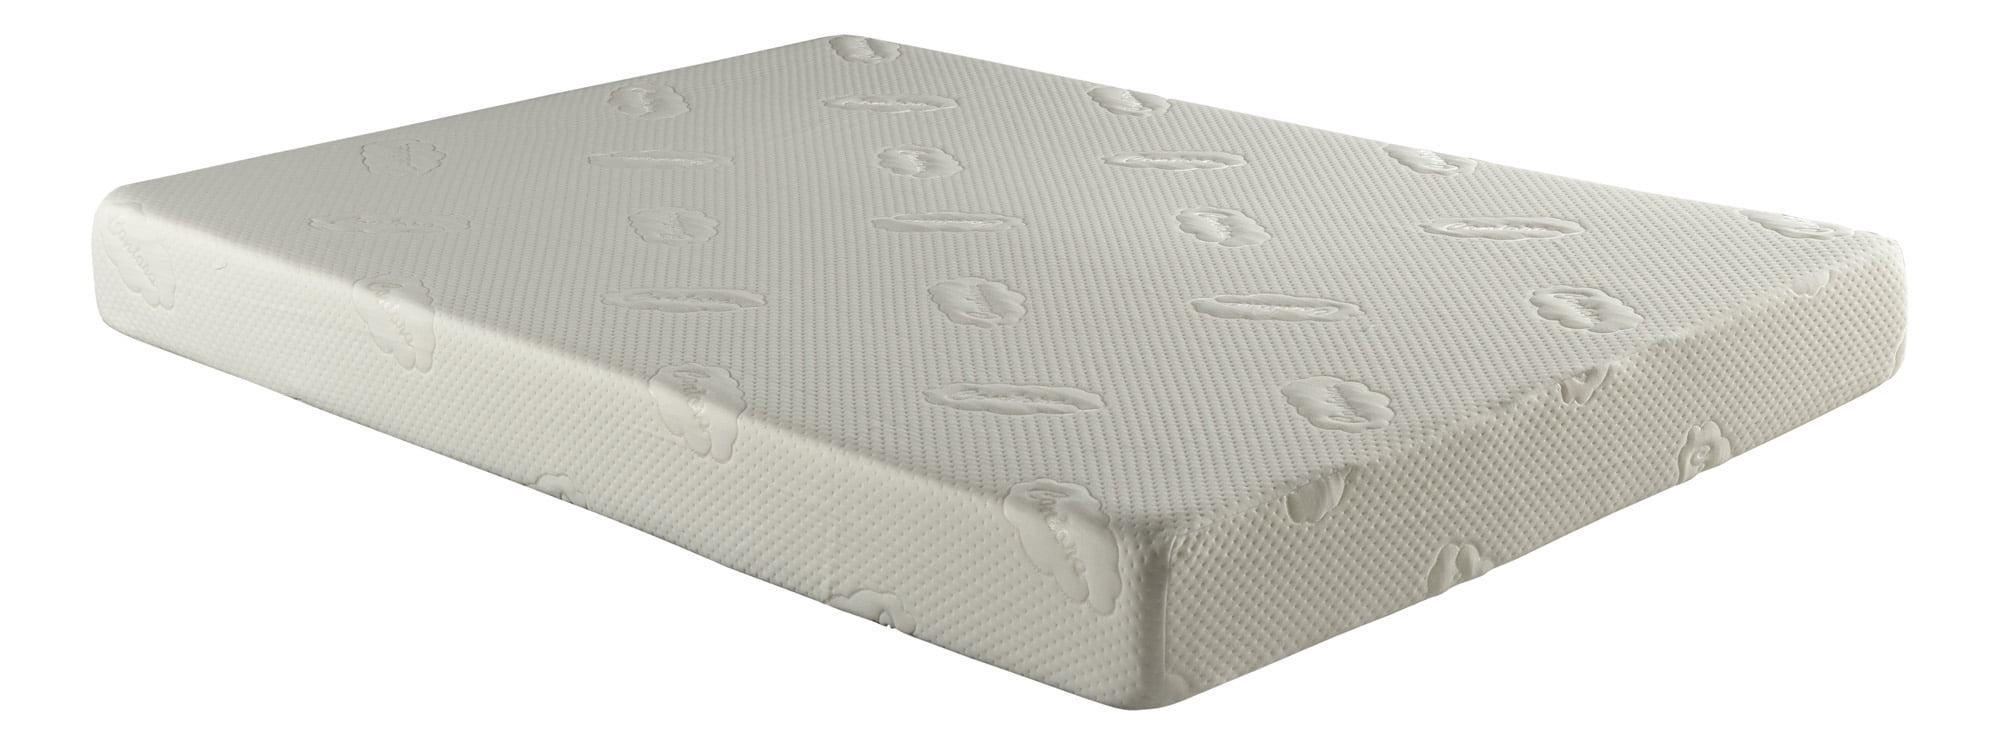 siesta memory foam mattress 7 inch queen